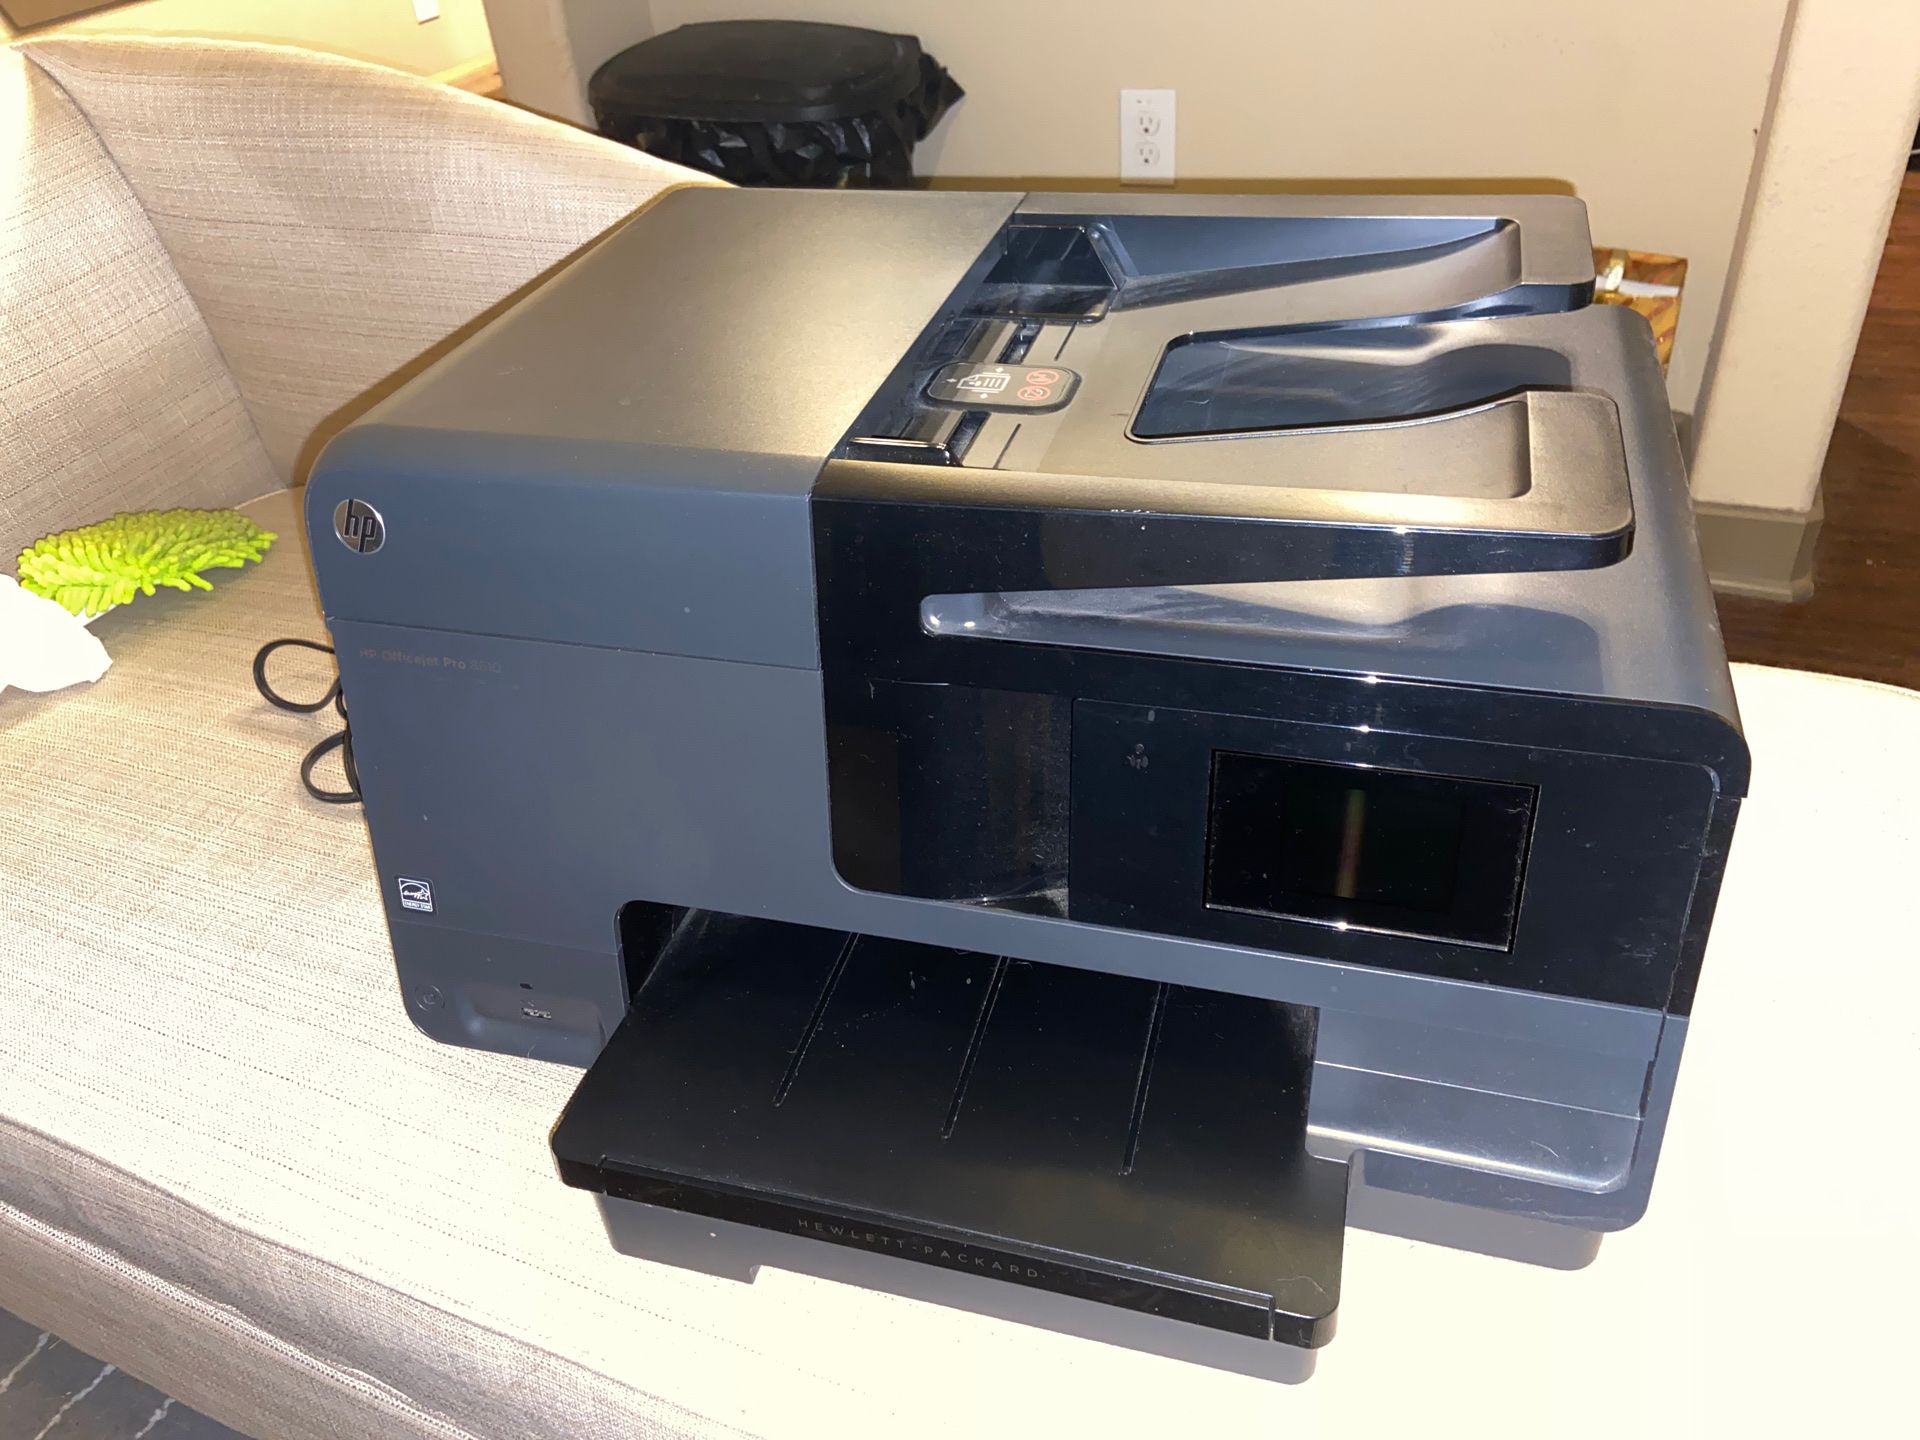 HP Officejet Pro printer/scanner/copier/fax machine